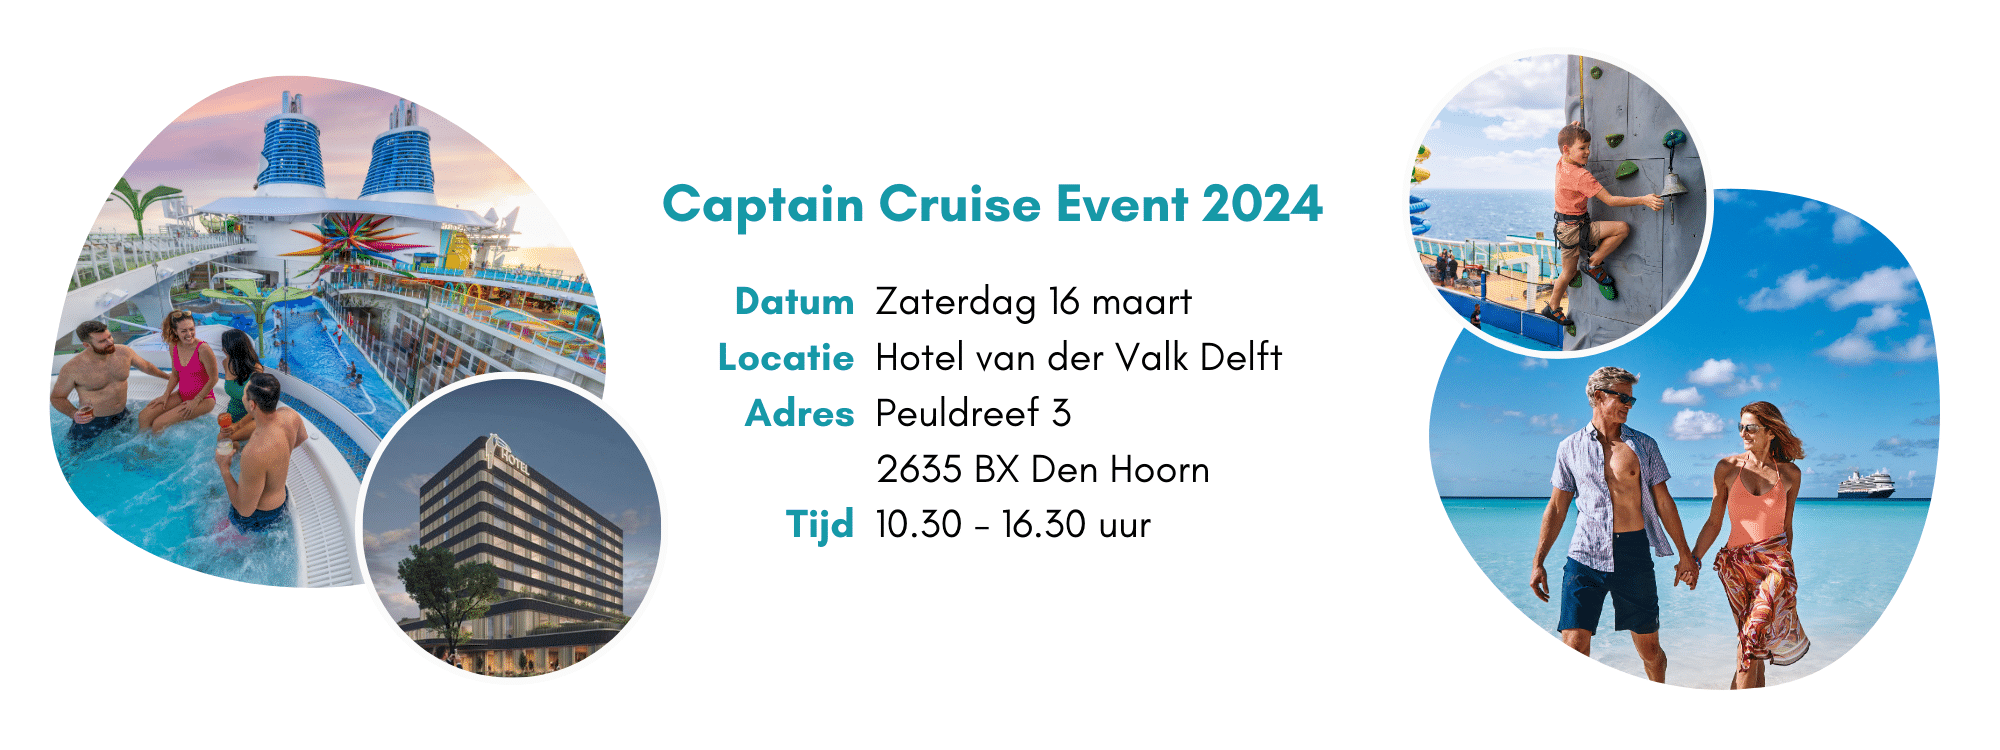 Captain Cruise Event - 2024 - Informatie